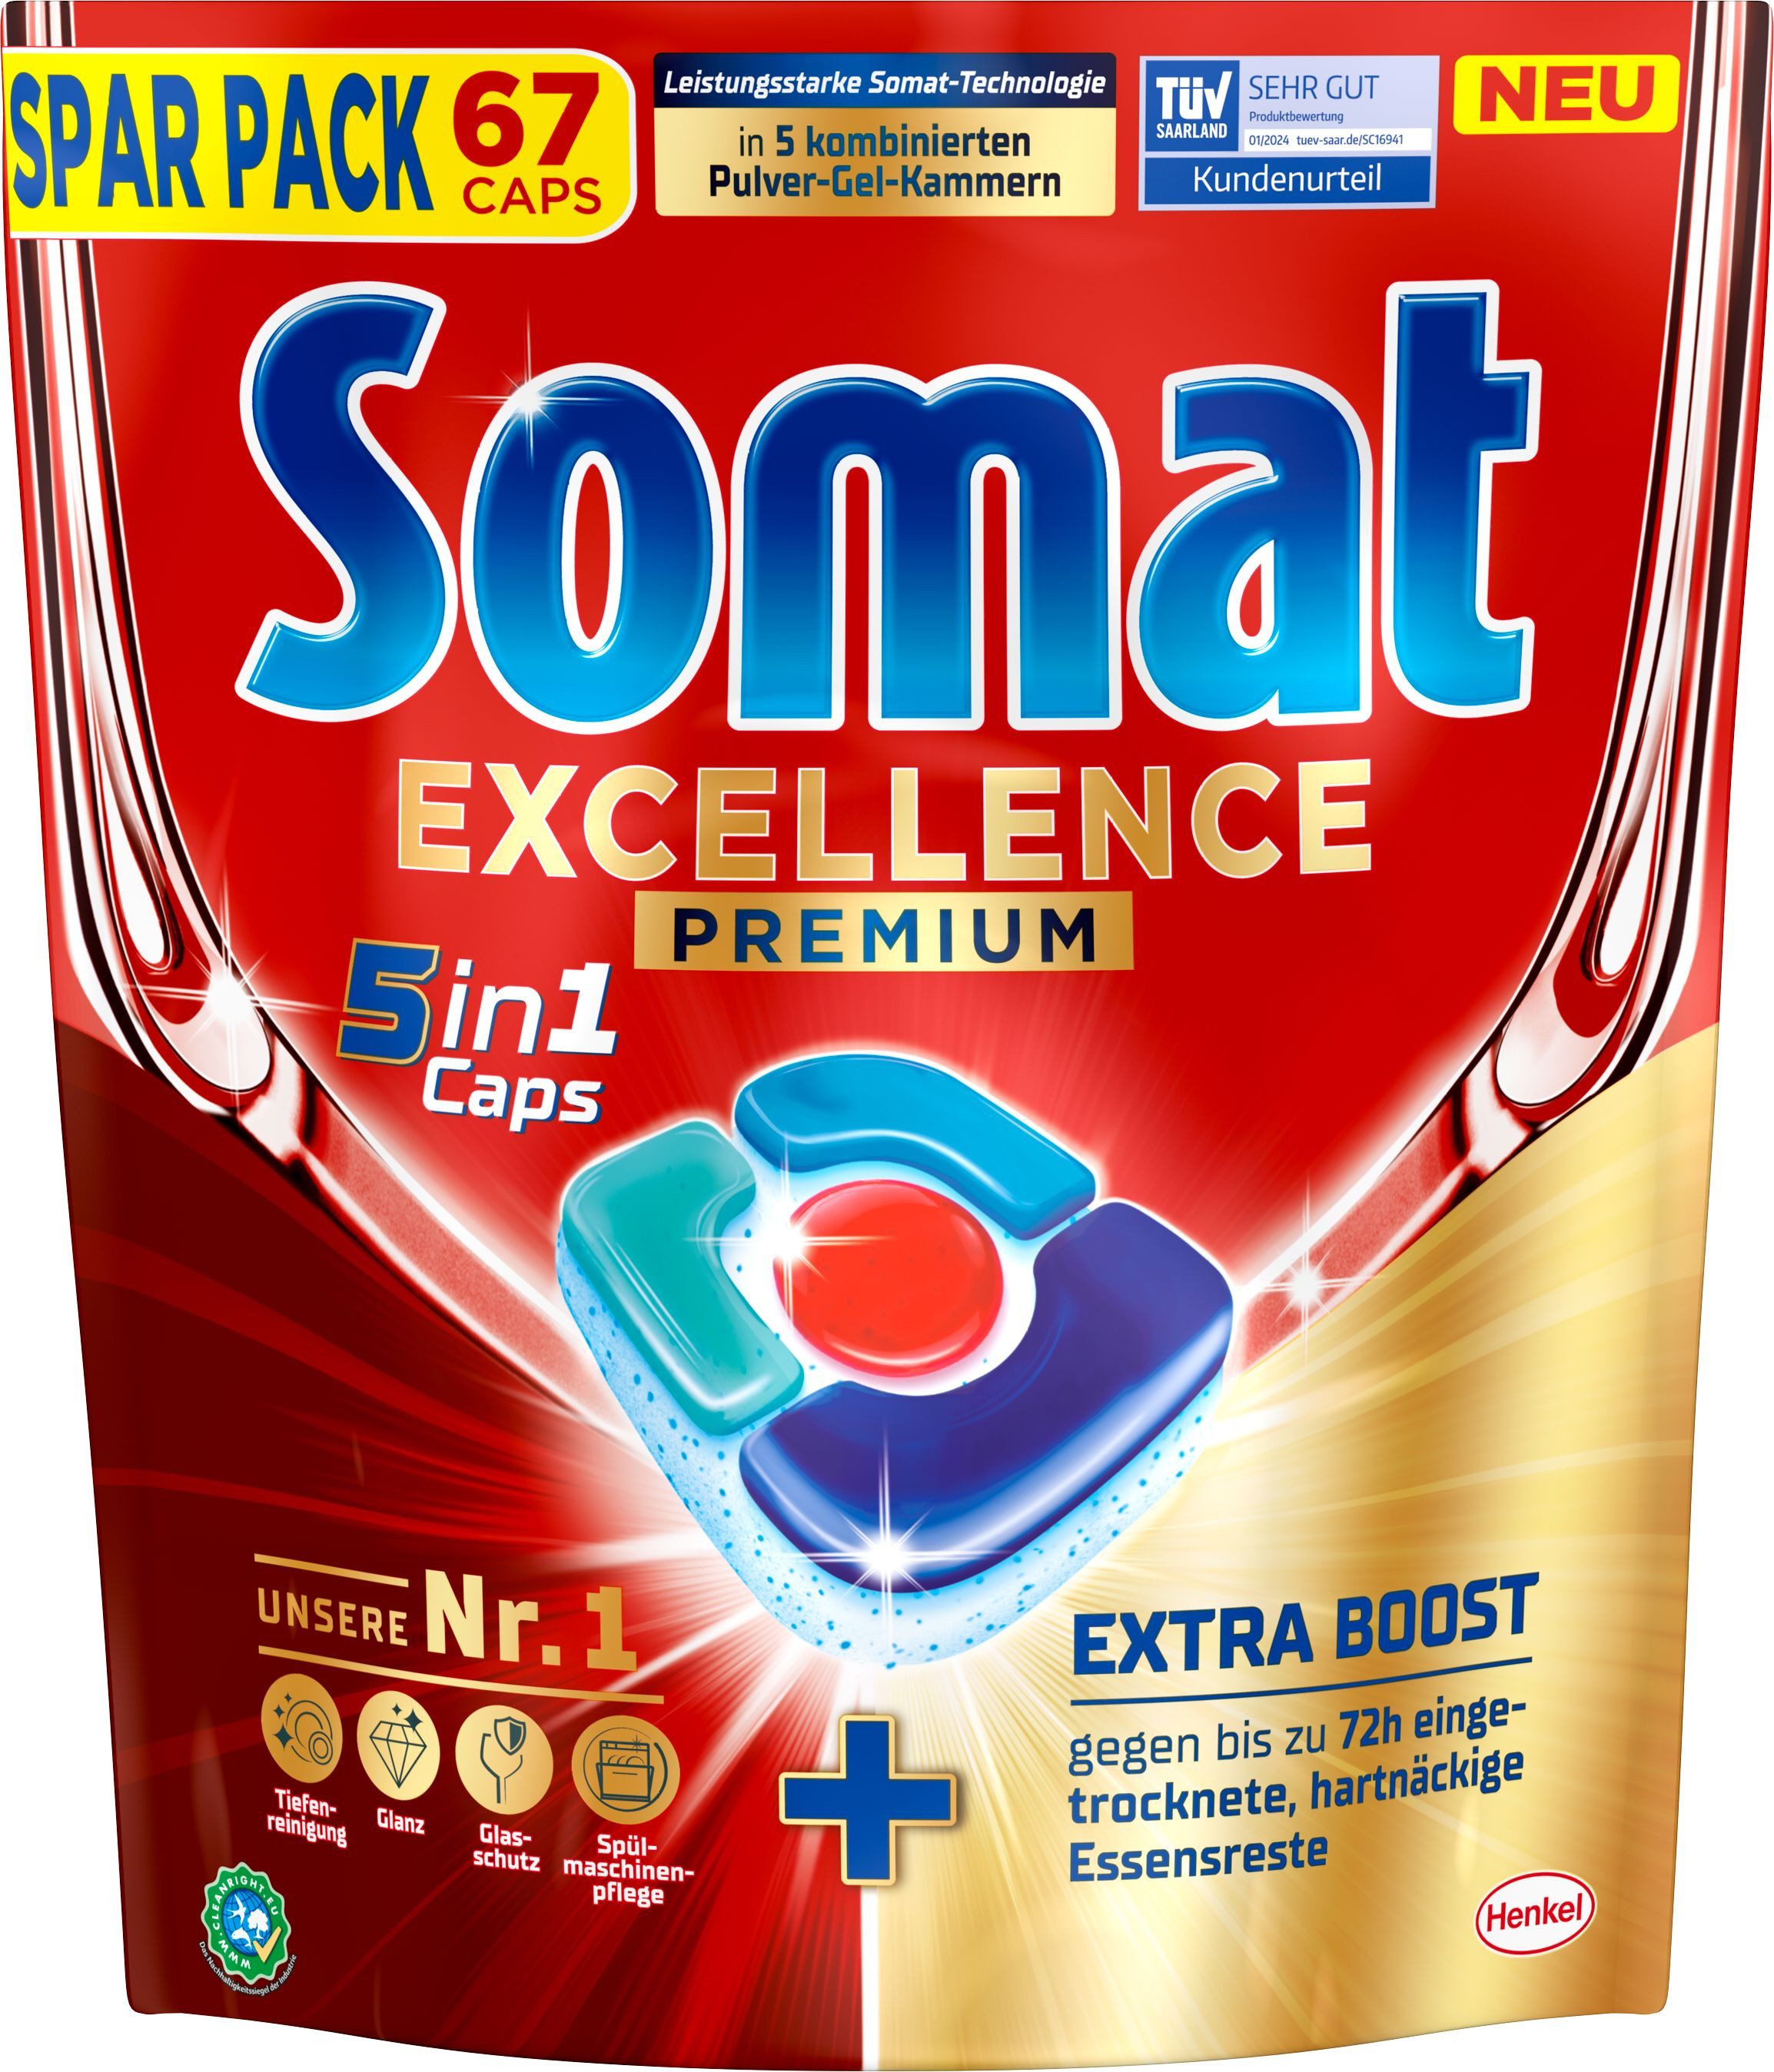 Somat 5in1 Caps Excellence Premium 67 AW Spülmaschinentabs (Spar Pack, [67-St. mit Extra Boost gegen hartnäckige Essensreste)